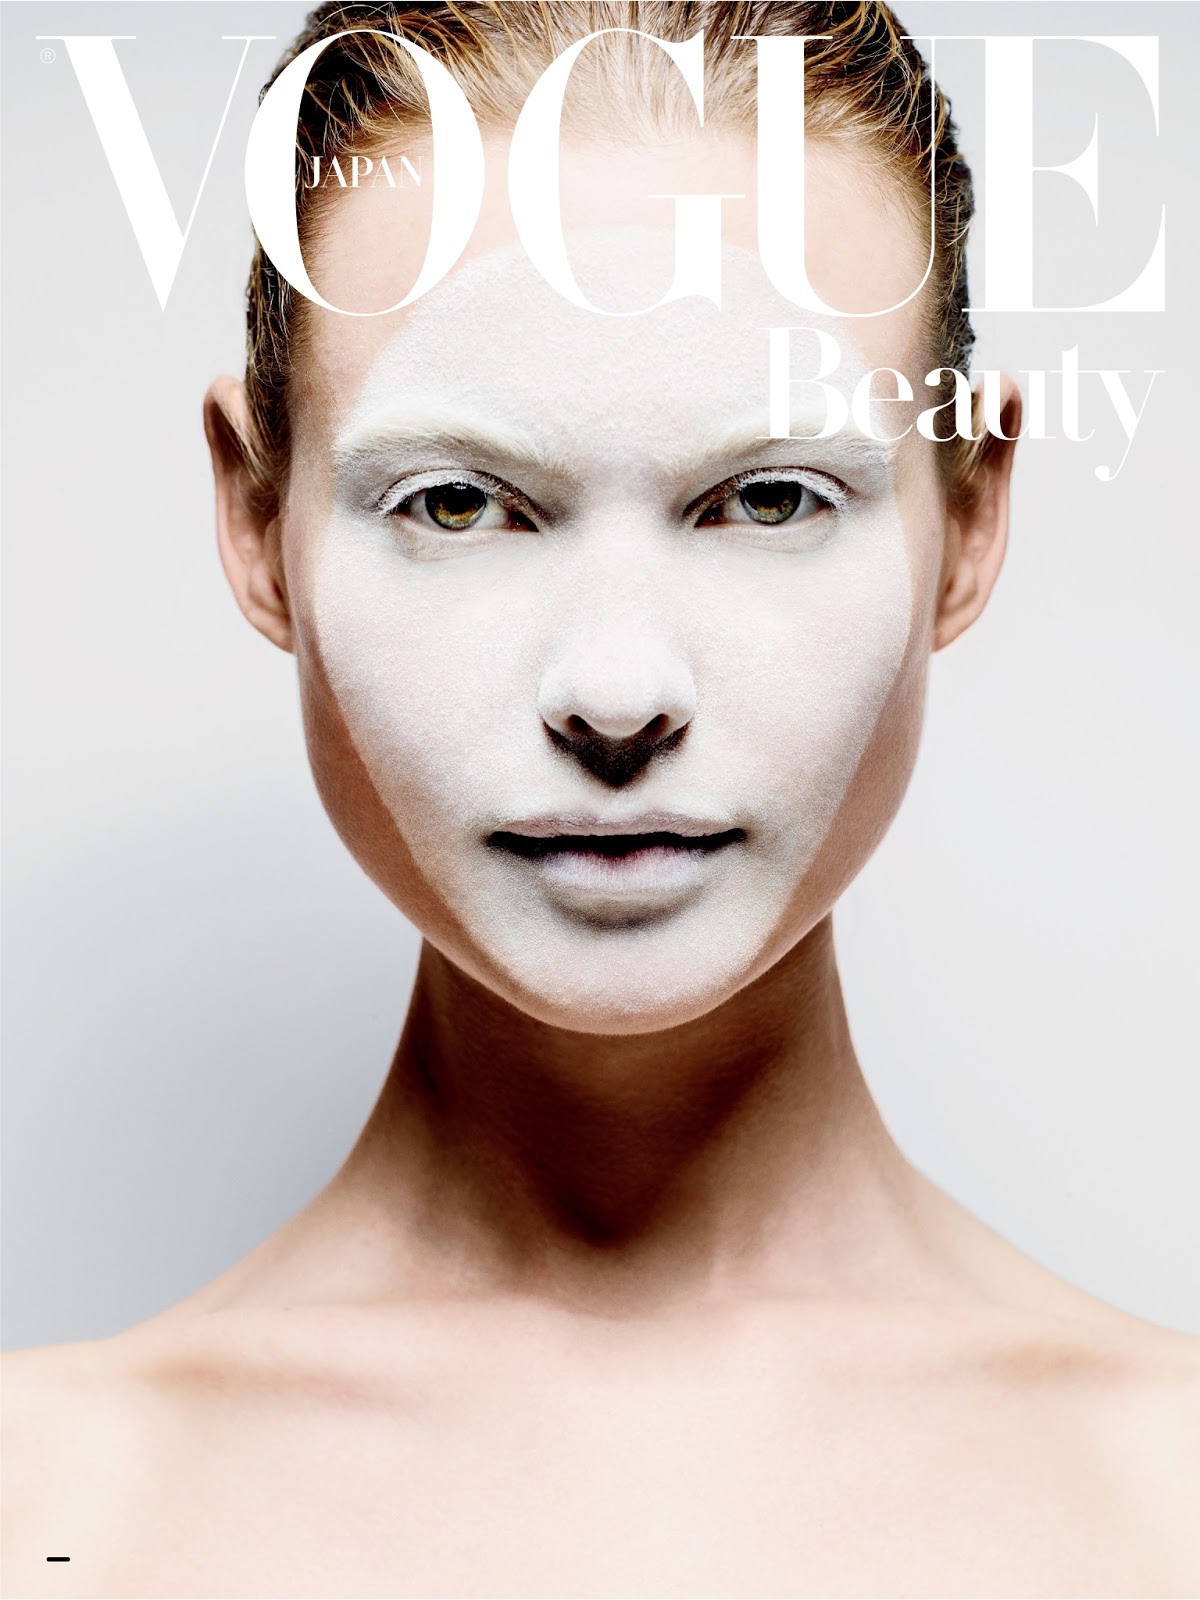 Behati Prinsloo by Liz Collins for Vogue Japan October 2013 (1)